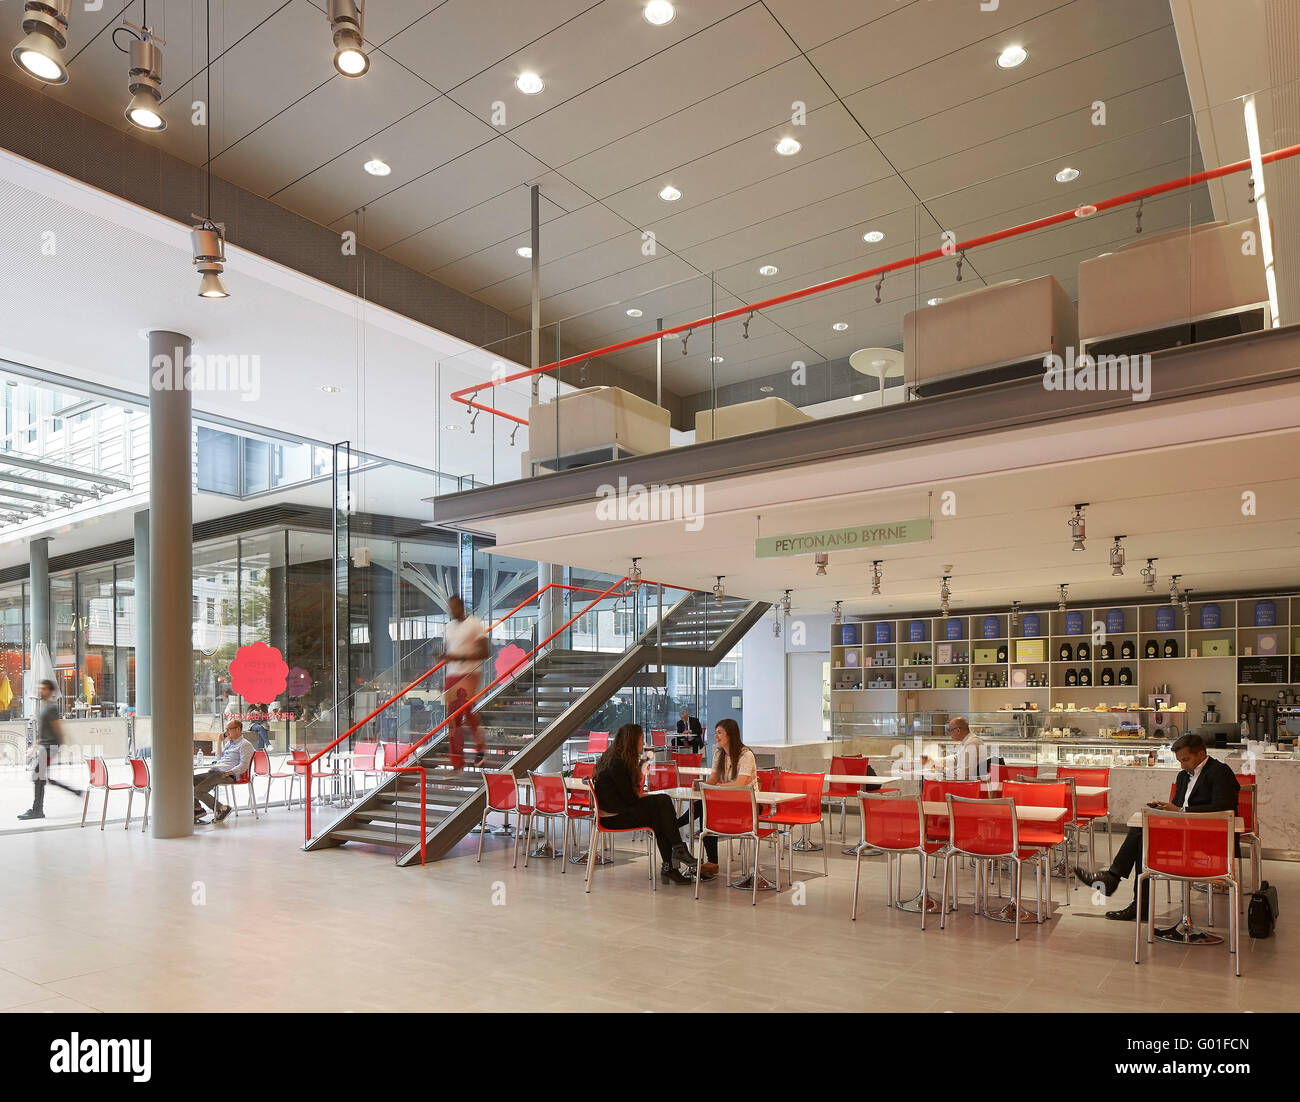 Ground floor restaurant with mezzanine. Central Saint Giles, London, United Kingdom. Architect: Renzo Piano Building Workshop, 2015. Stock Photo